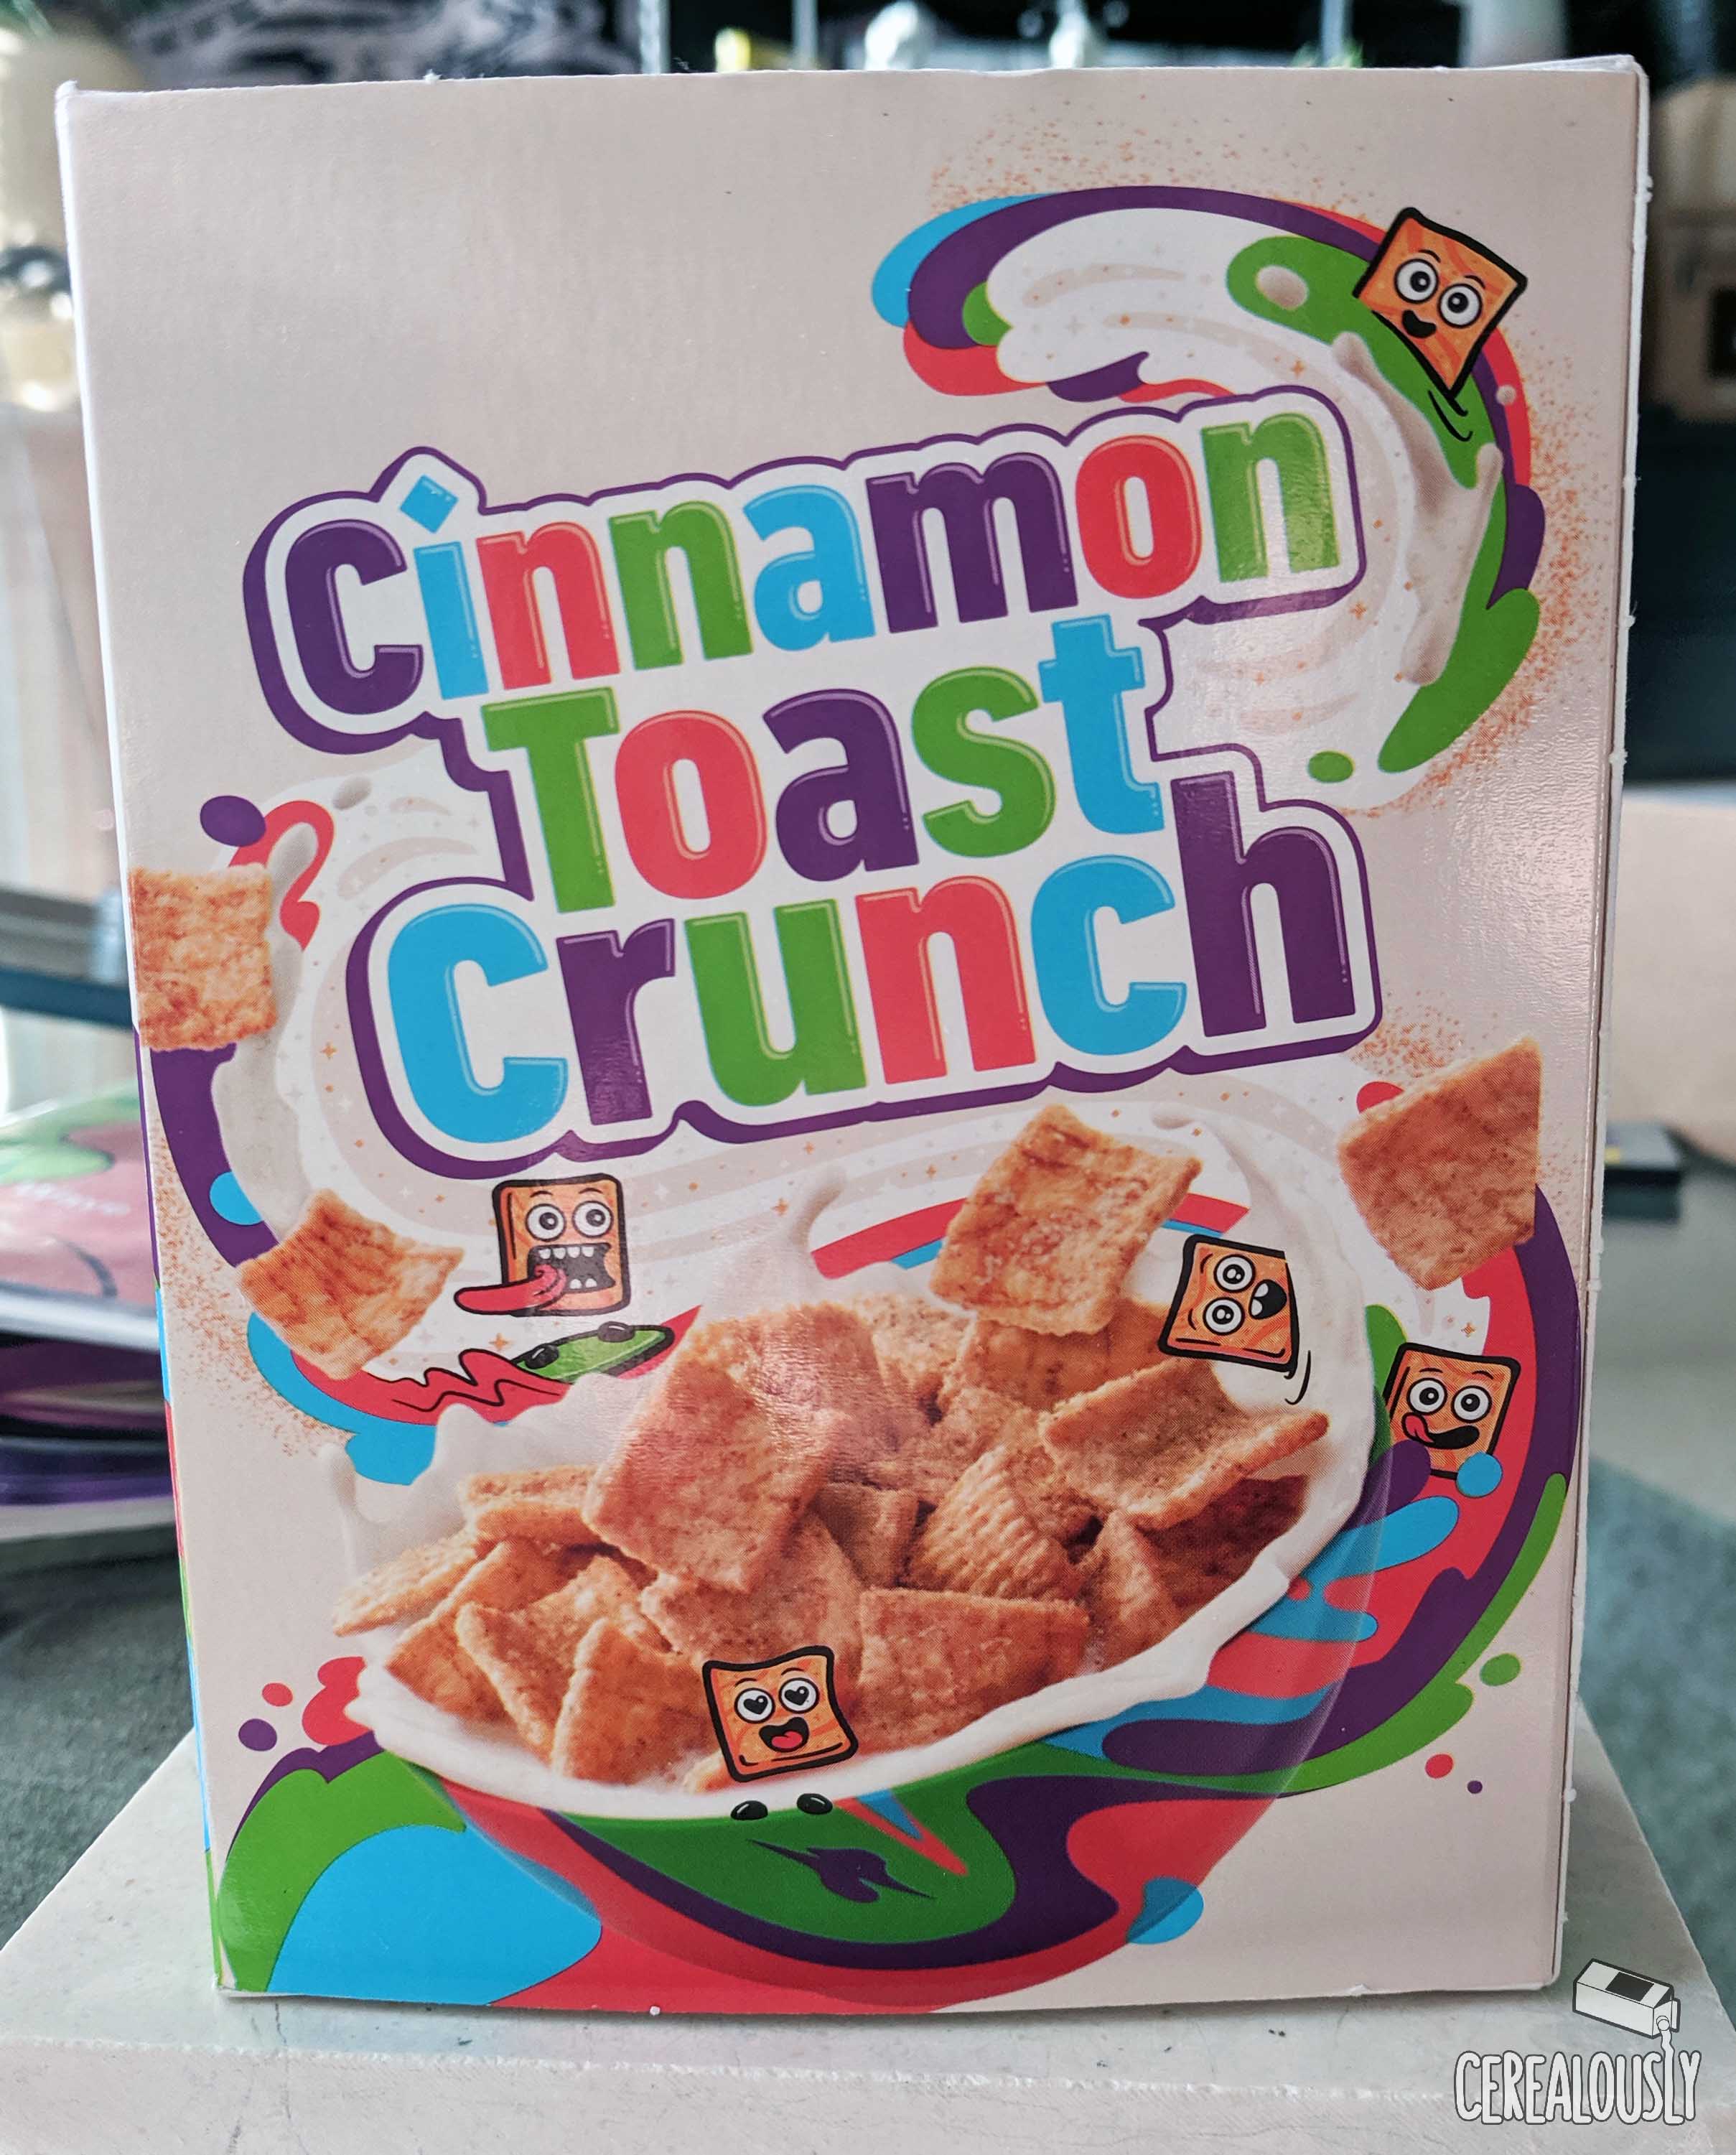 cinnamon toast crunch granola bar